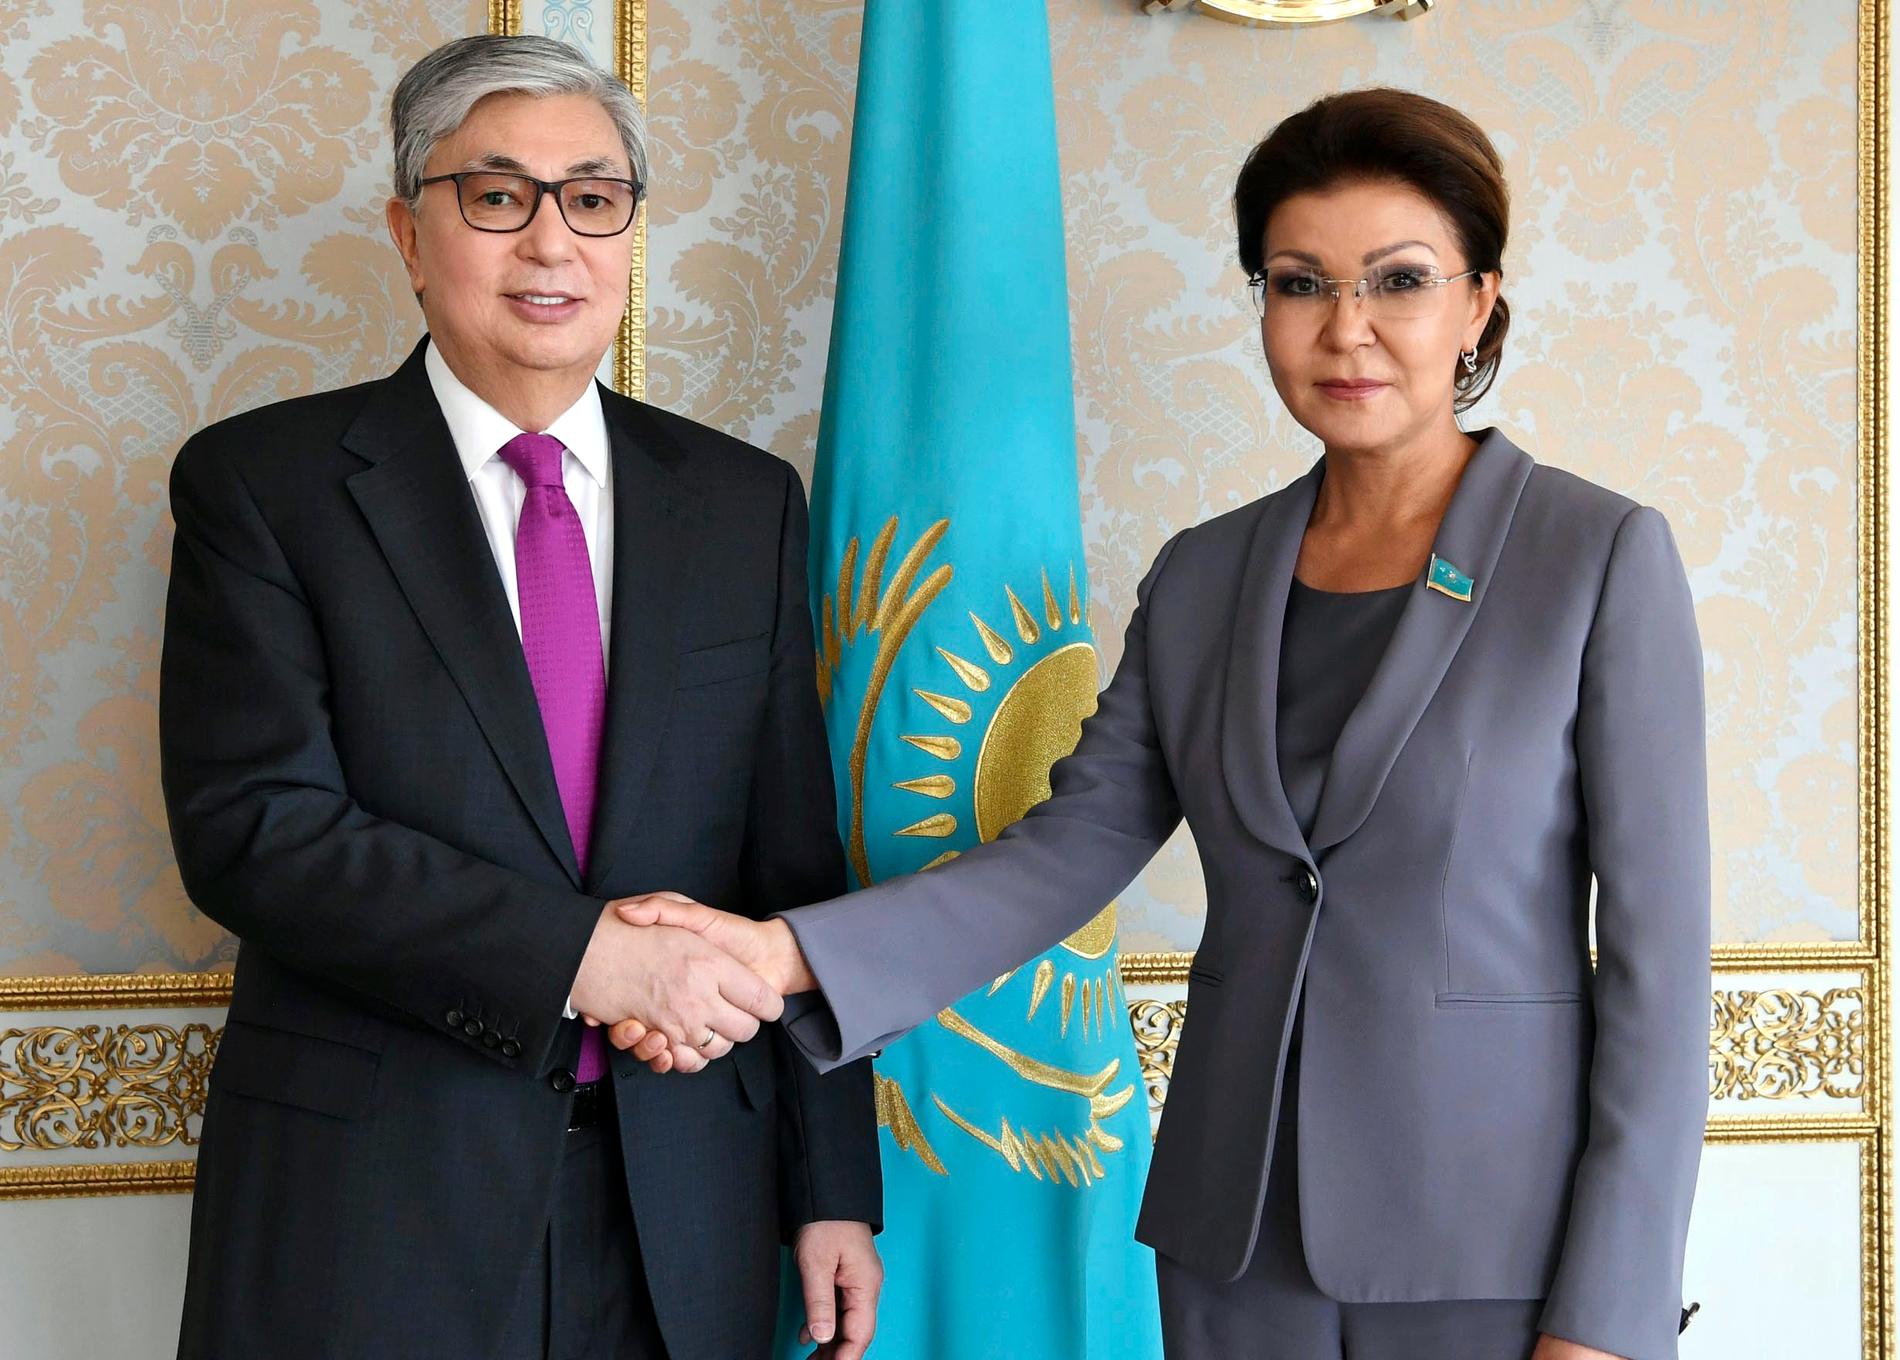 Kazakstan nyinsvurne interimspresident Kasym-Zjomart Tokajev och den tidigare presidentens dotter Dariga Nazarbajeva tidigare i veckan.